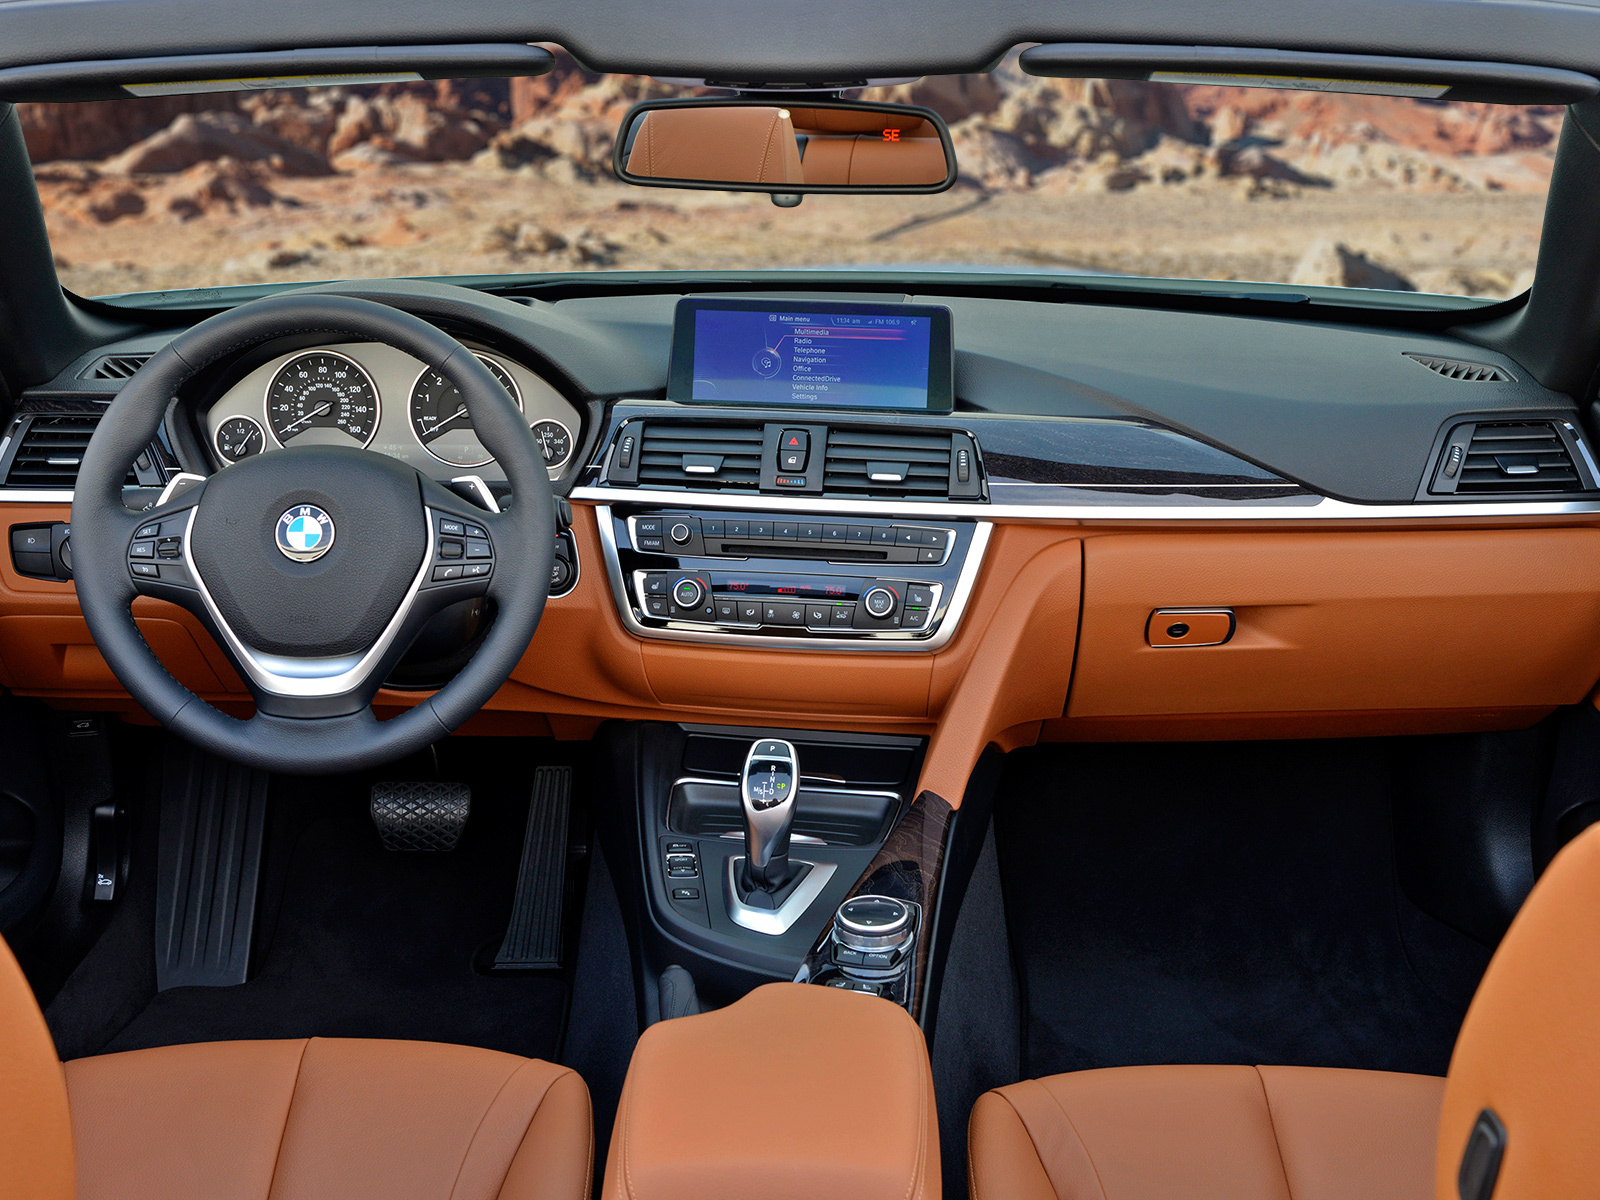     BMW 435i Convertible